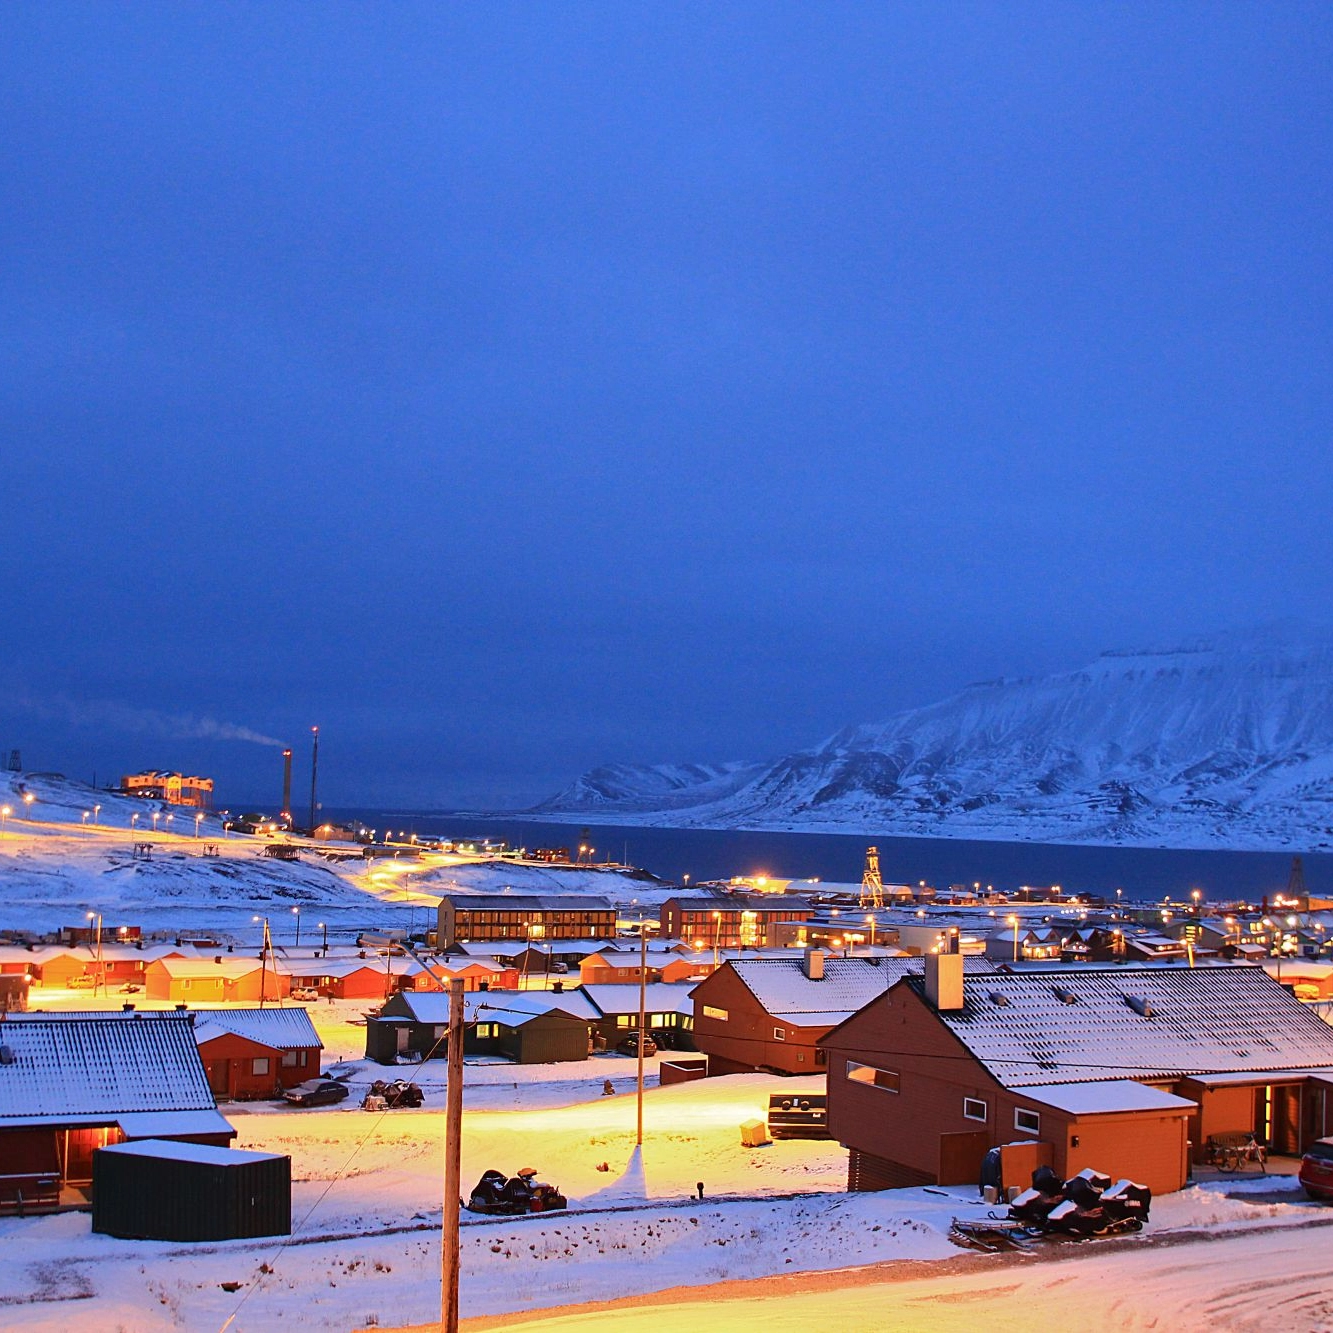 Mining community of Longyearbyen, Svalbard - Norway